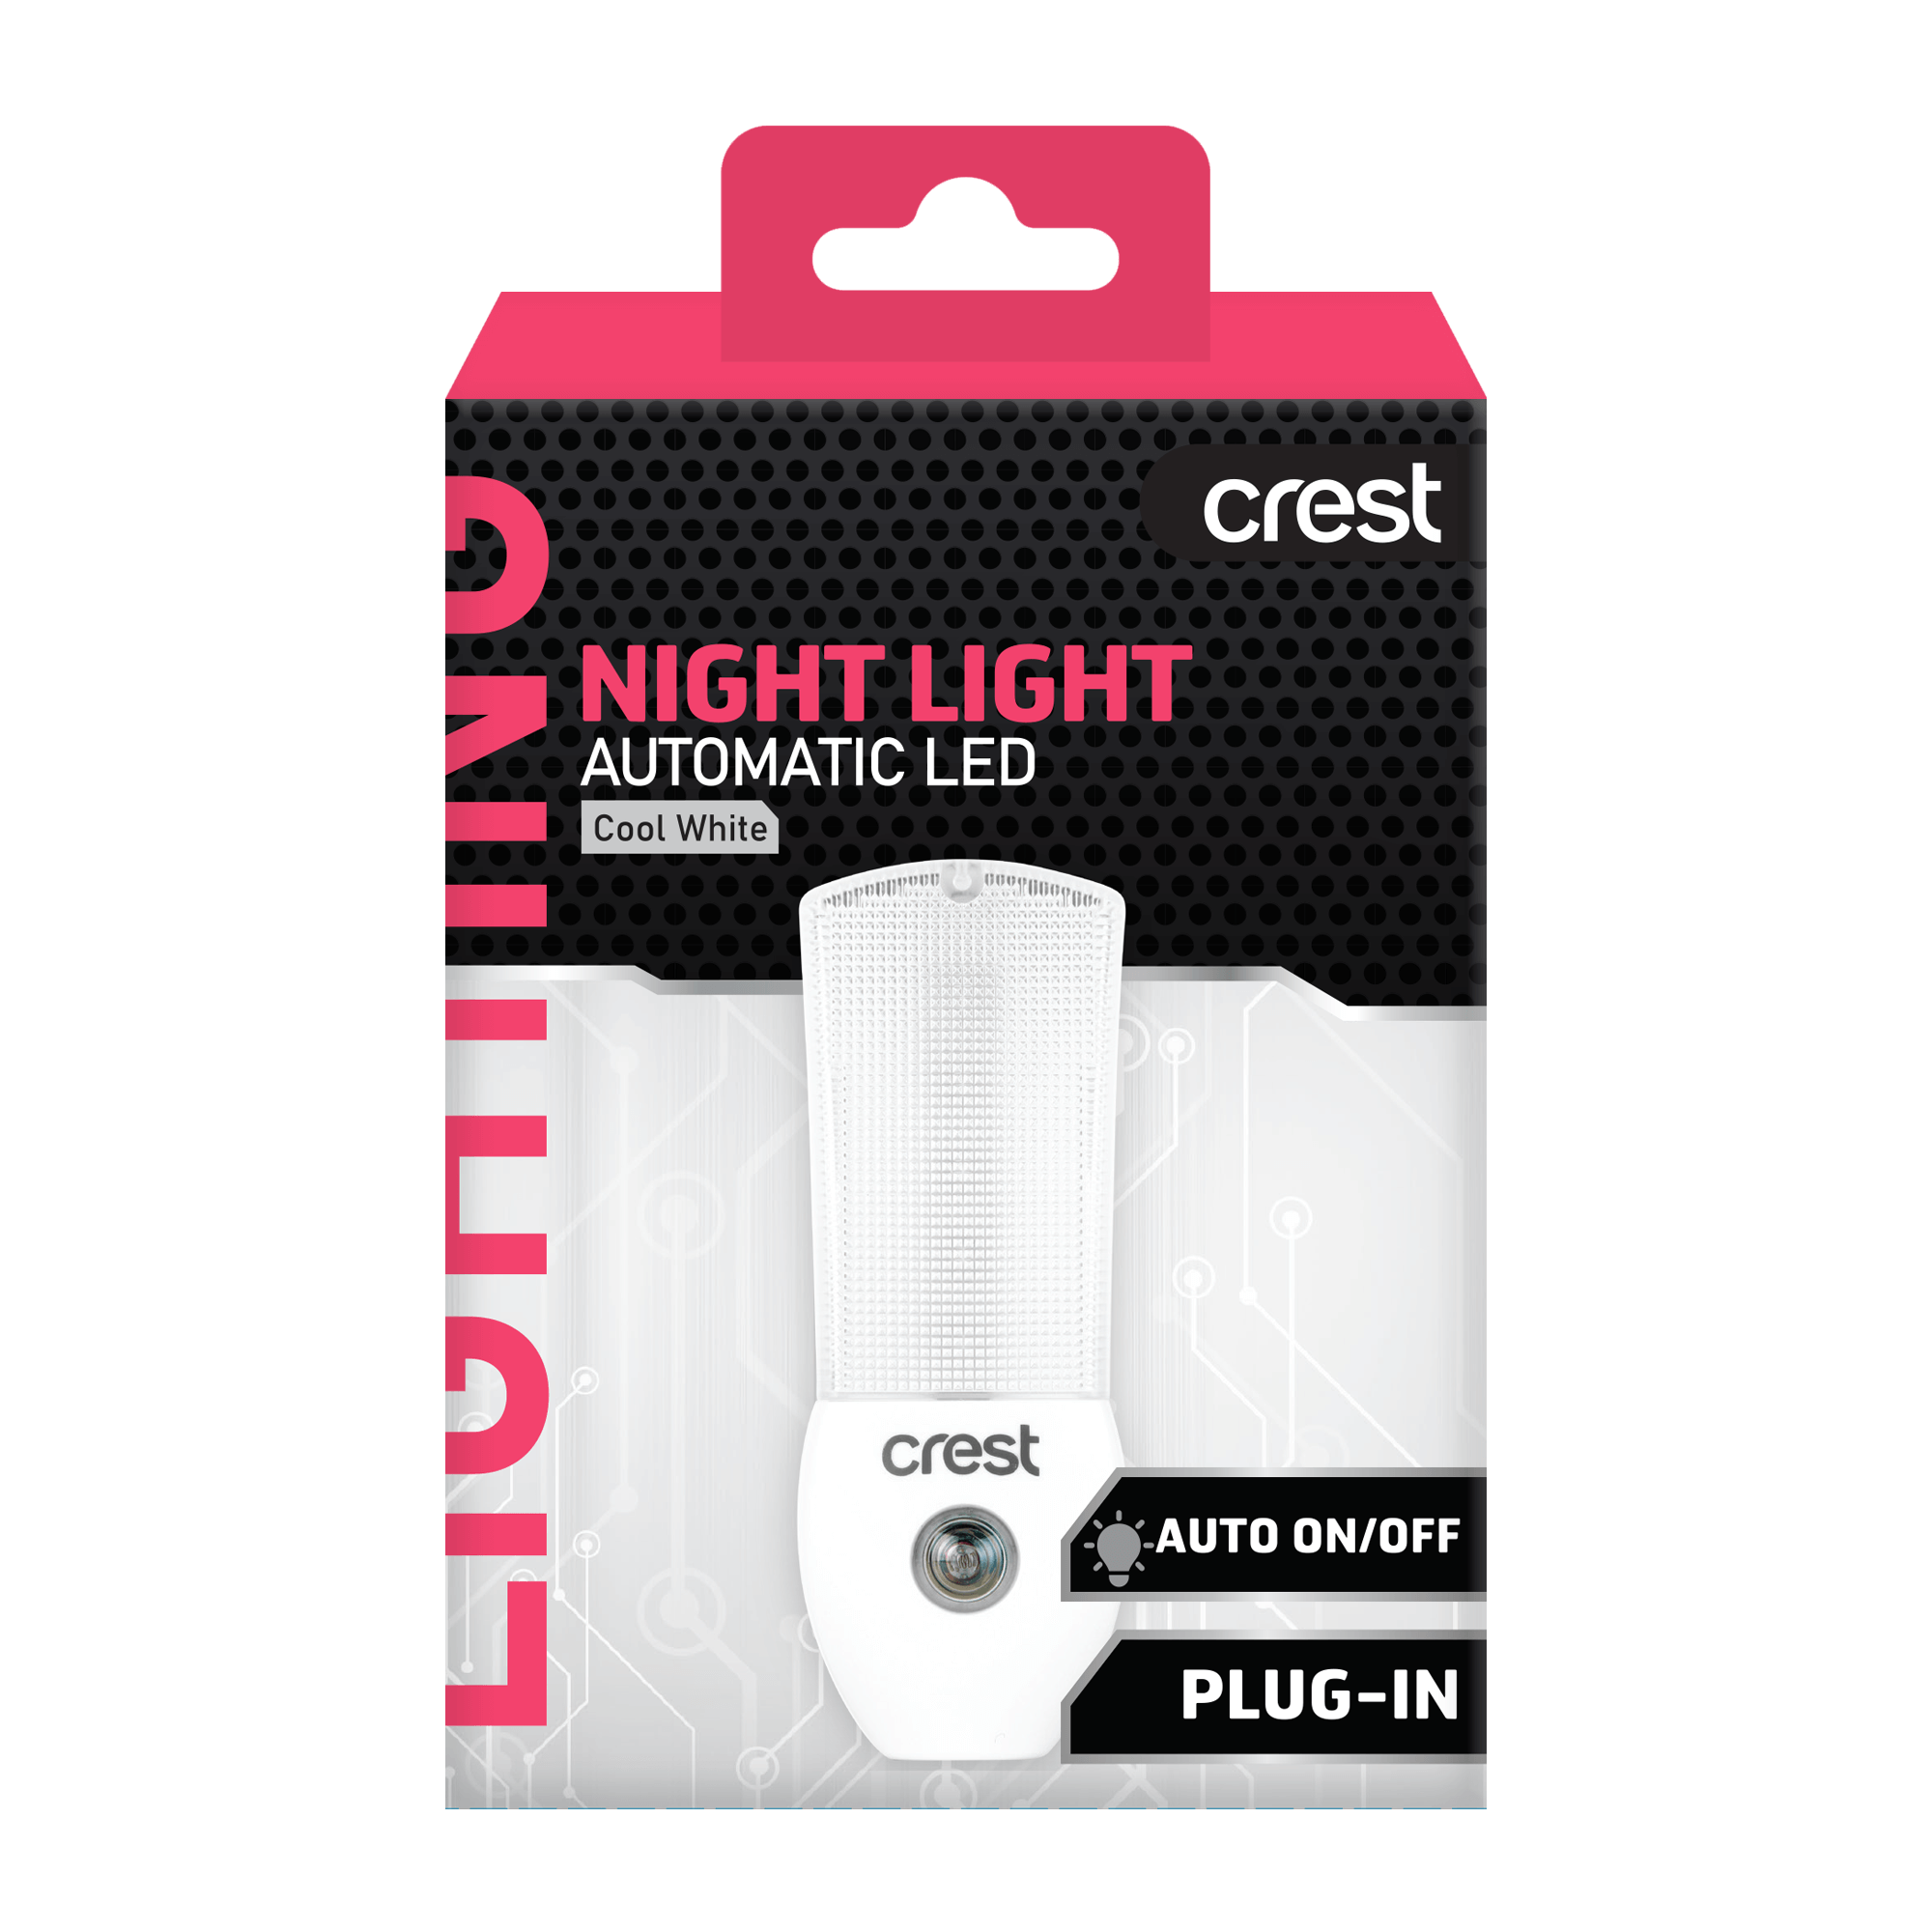 Automatic LED Night Light